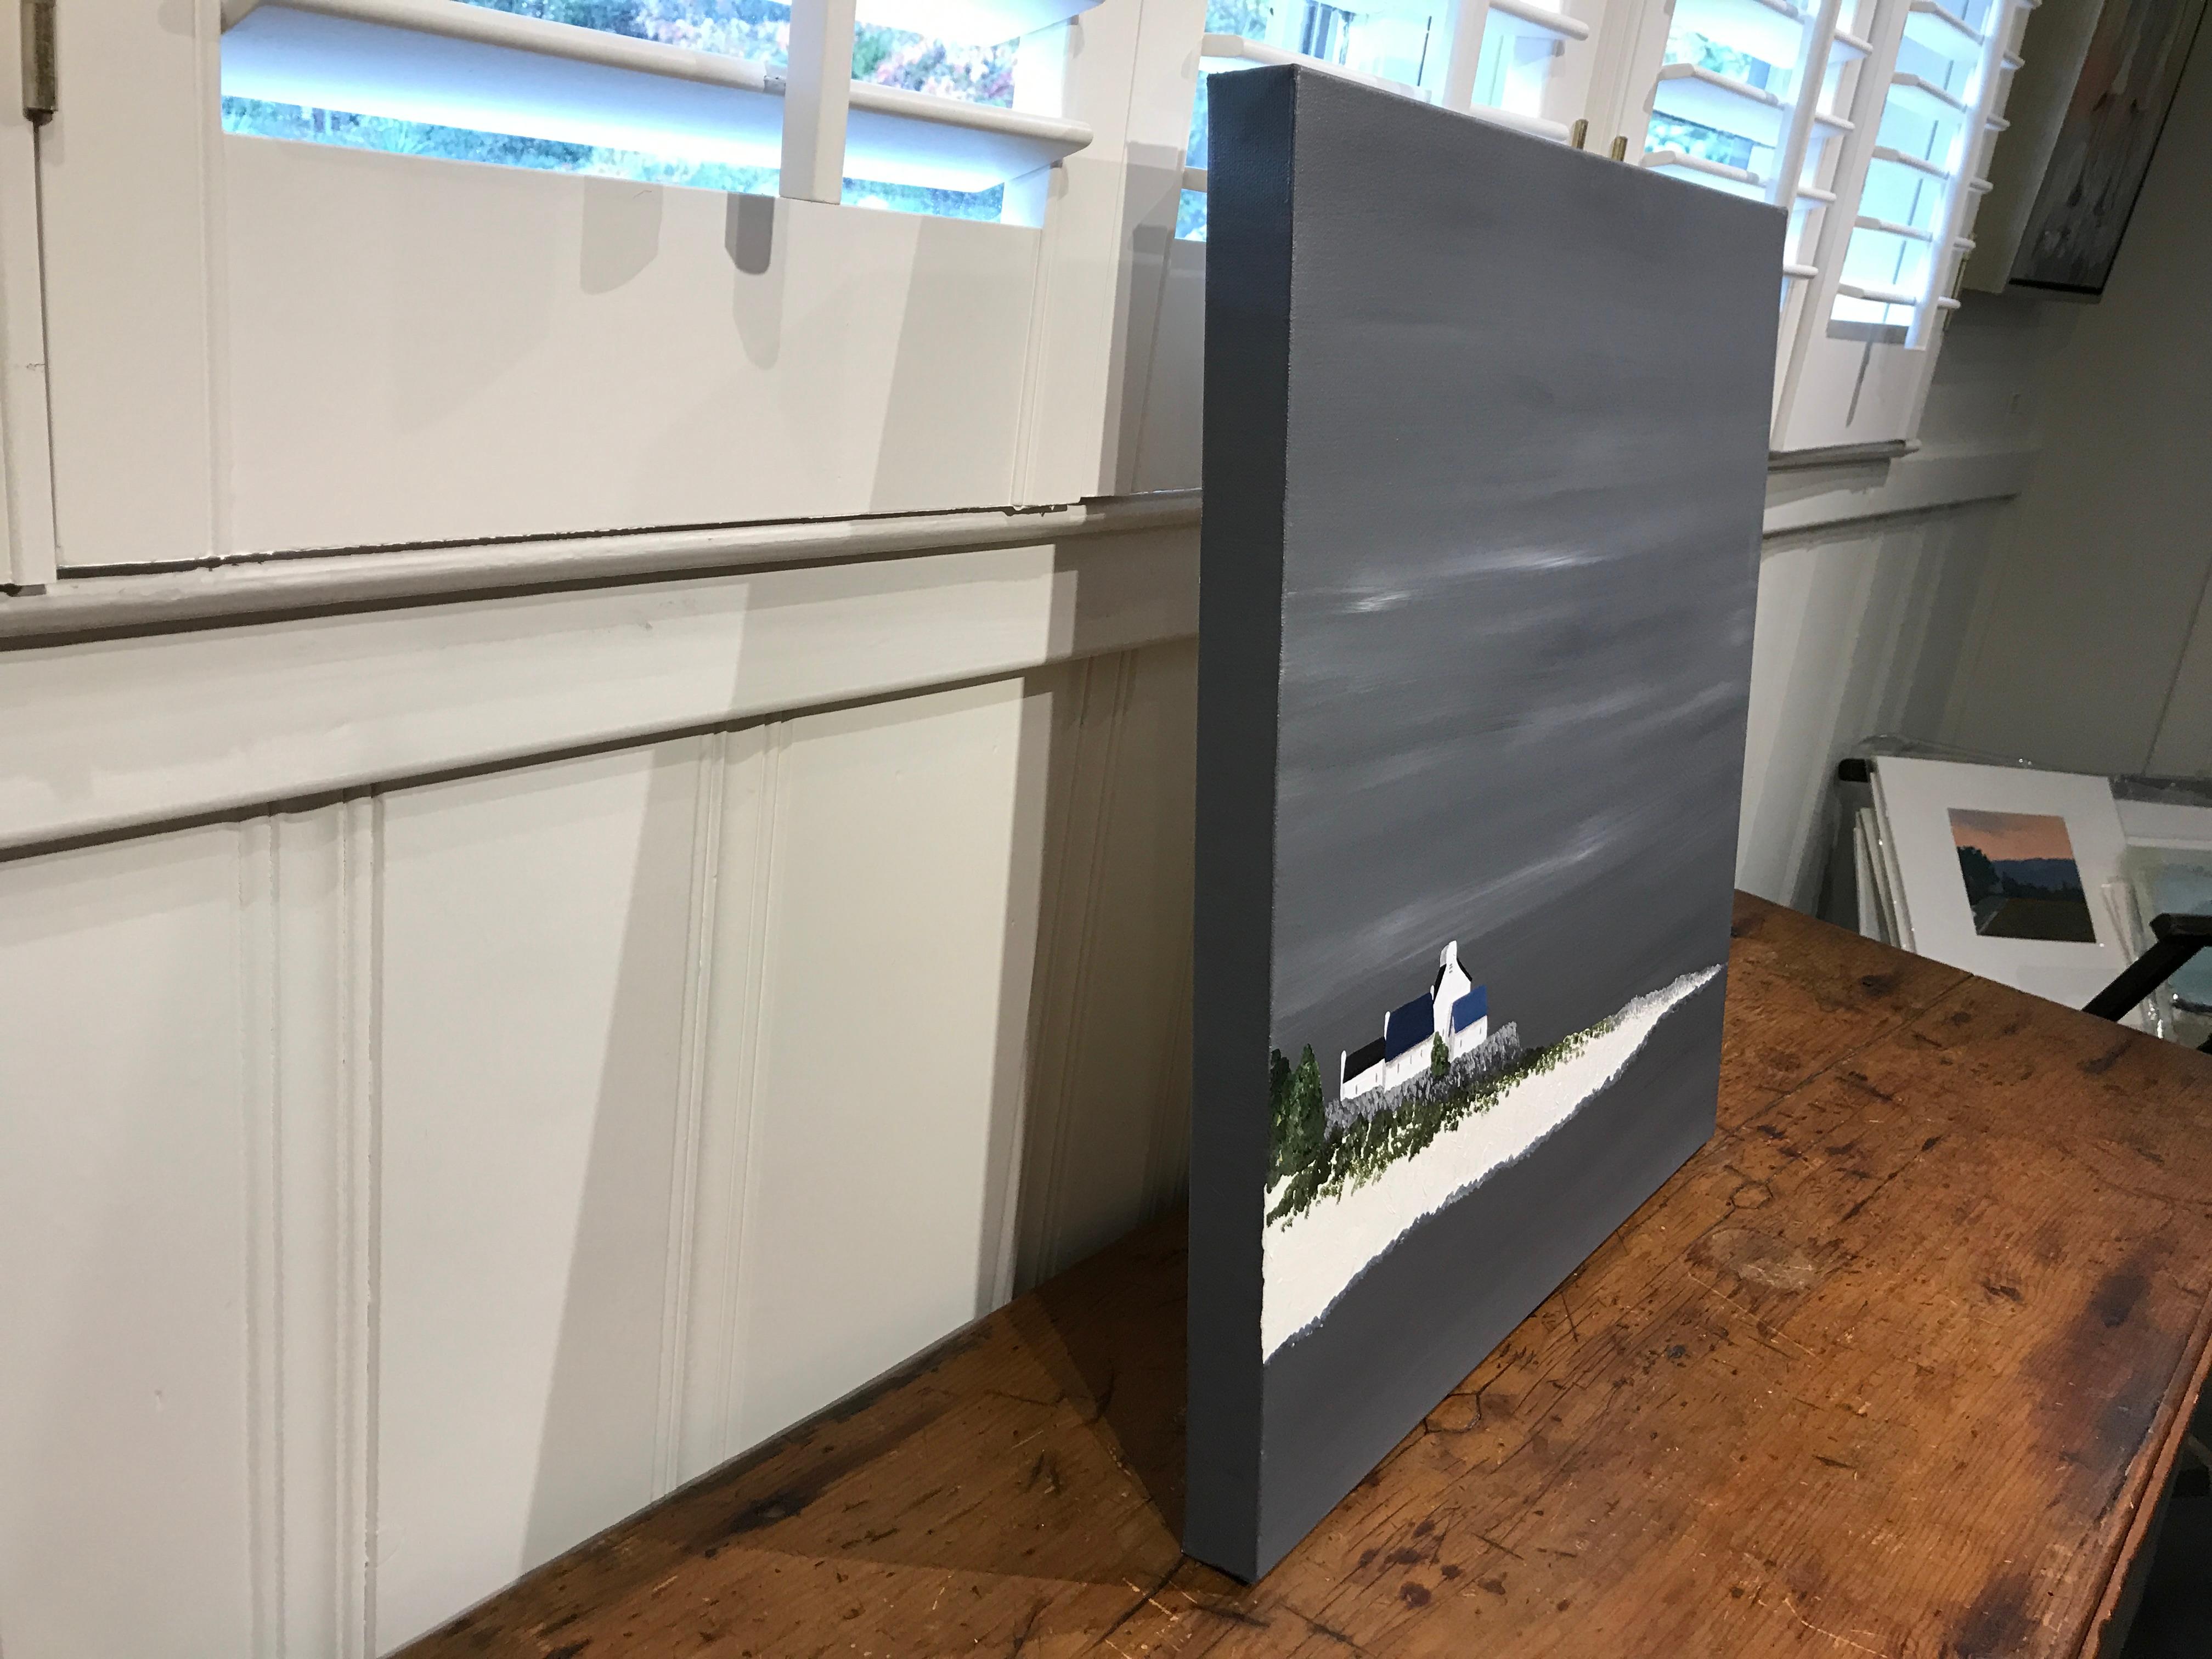 Pleasing Light, Susan Kinsella 2018 Contemporary Square Coastal Painting 6